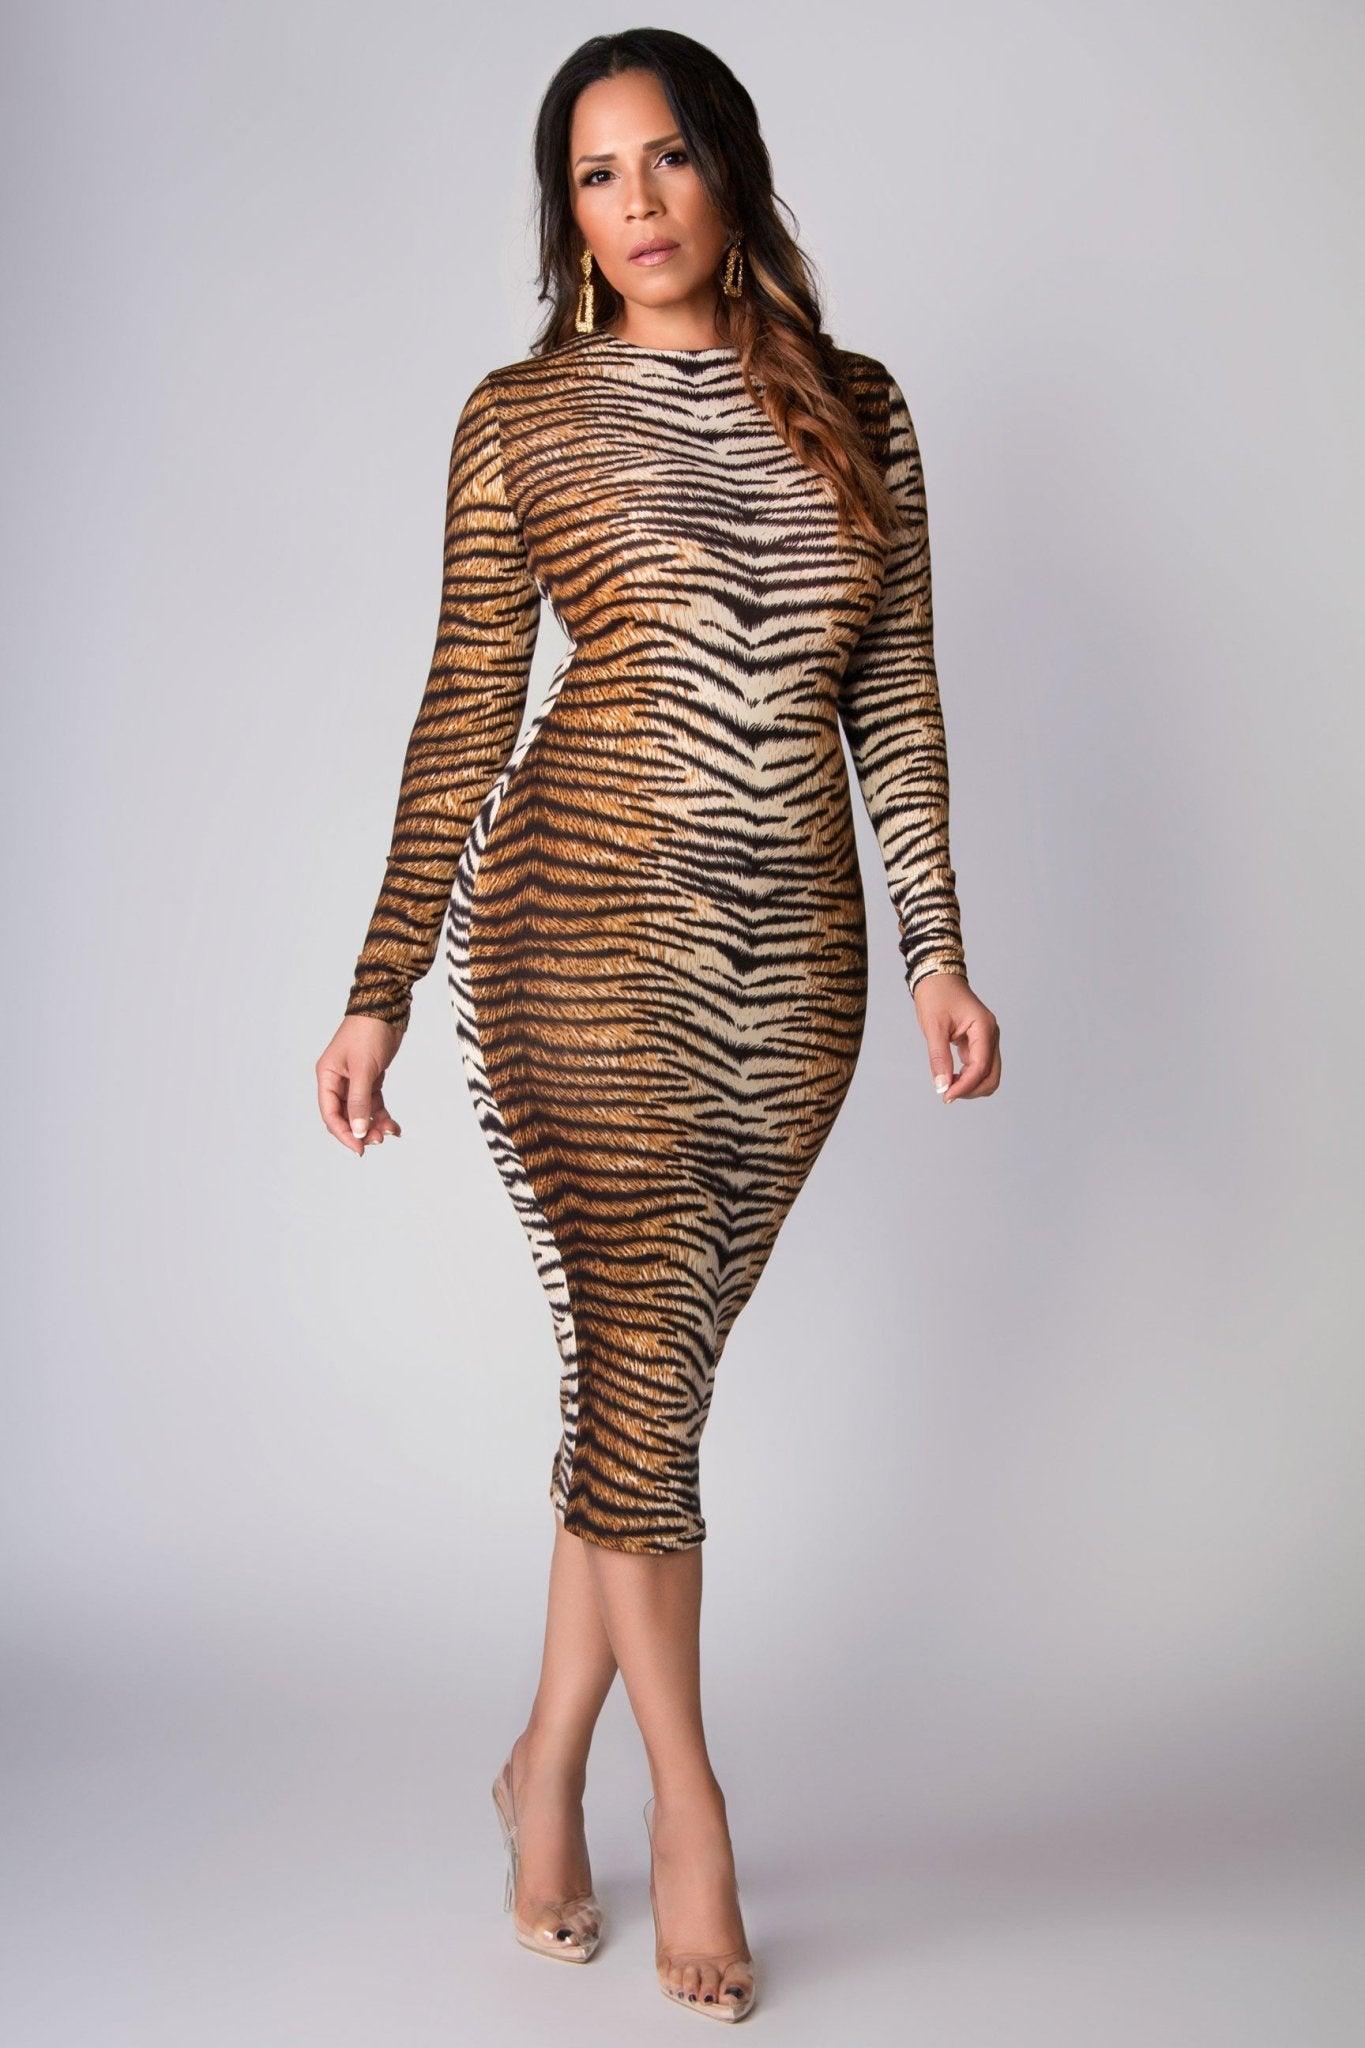 Lola Long Sleeves Bodycon Animal Print Sexy Midi Dress - MY SEXY STYLES